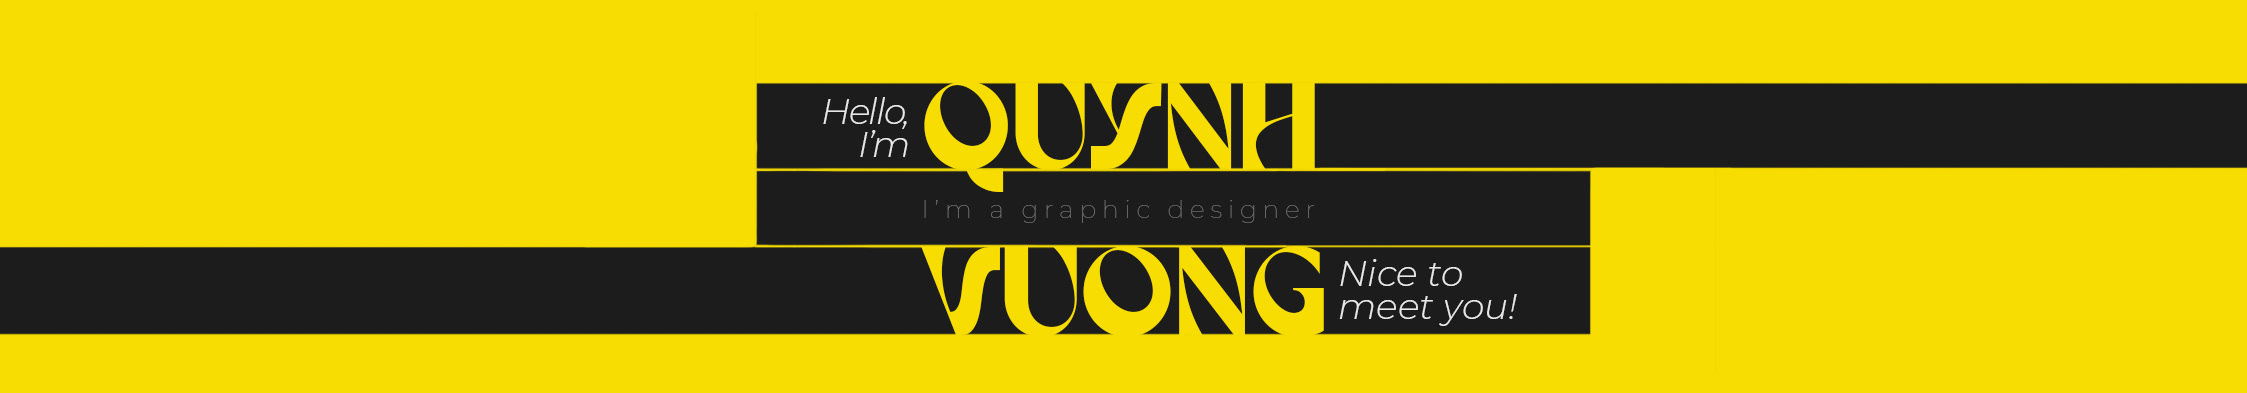 Quynh Vuong's profile banner